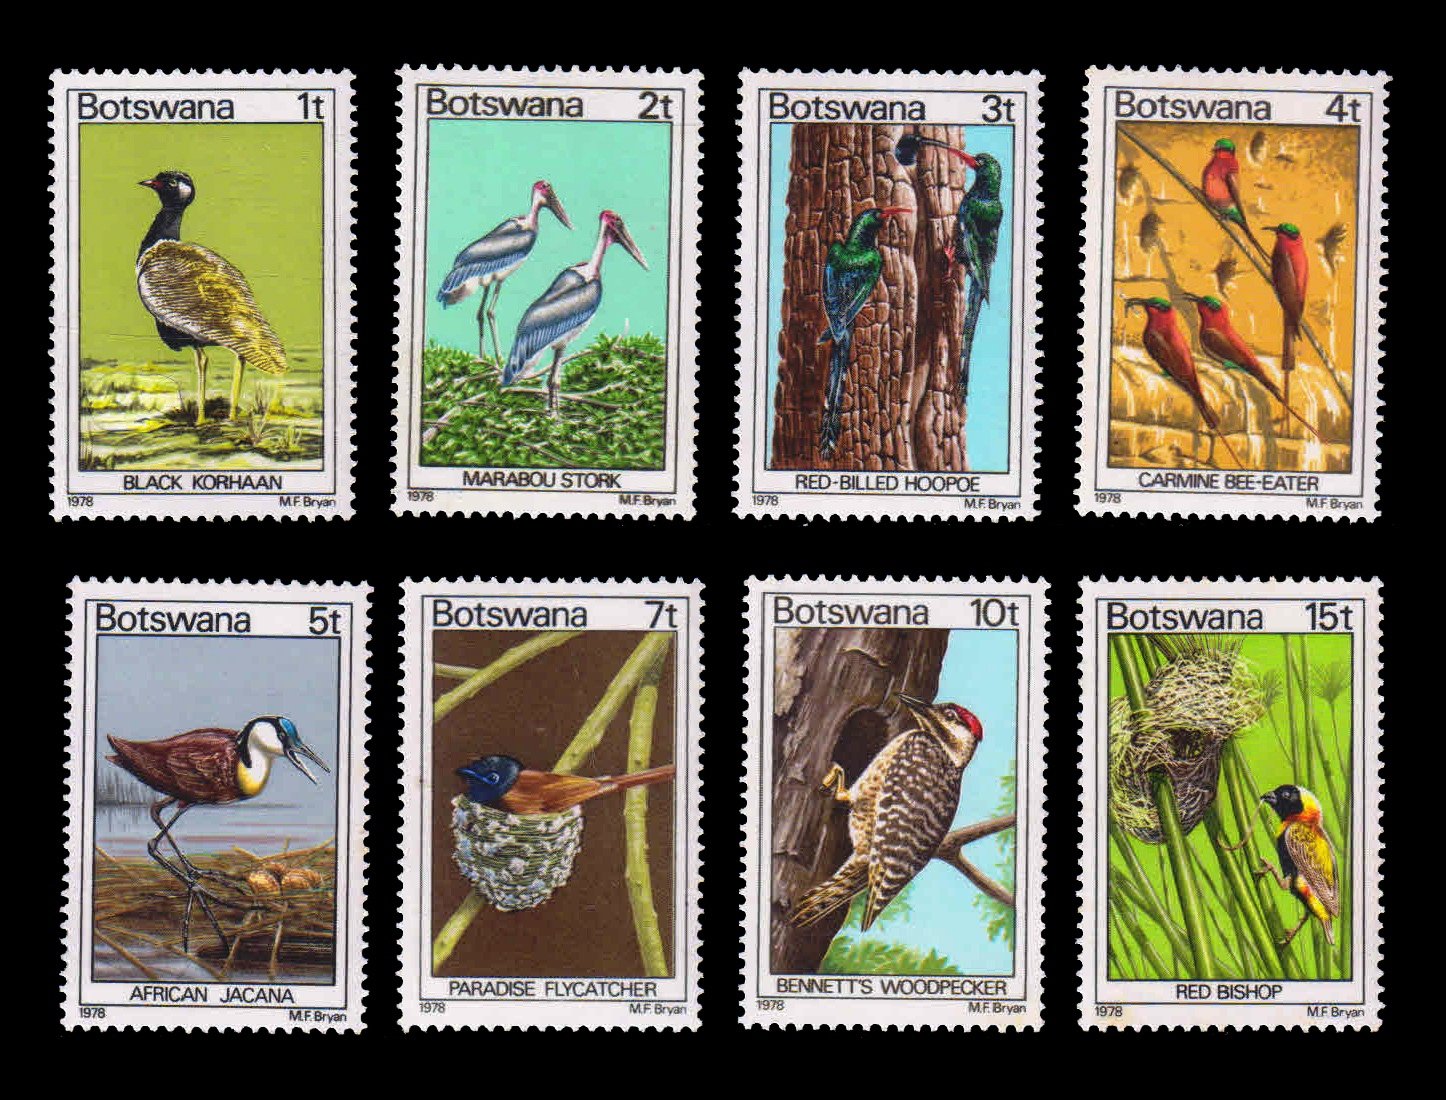 BOTSWANA 1978 - Birds, Set of 8, MNH. S.G. 411-418. Cat £ 10